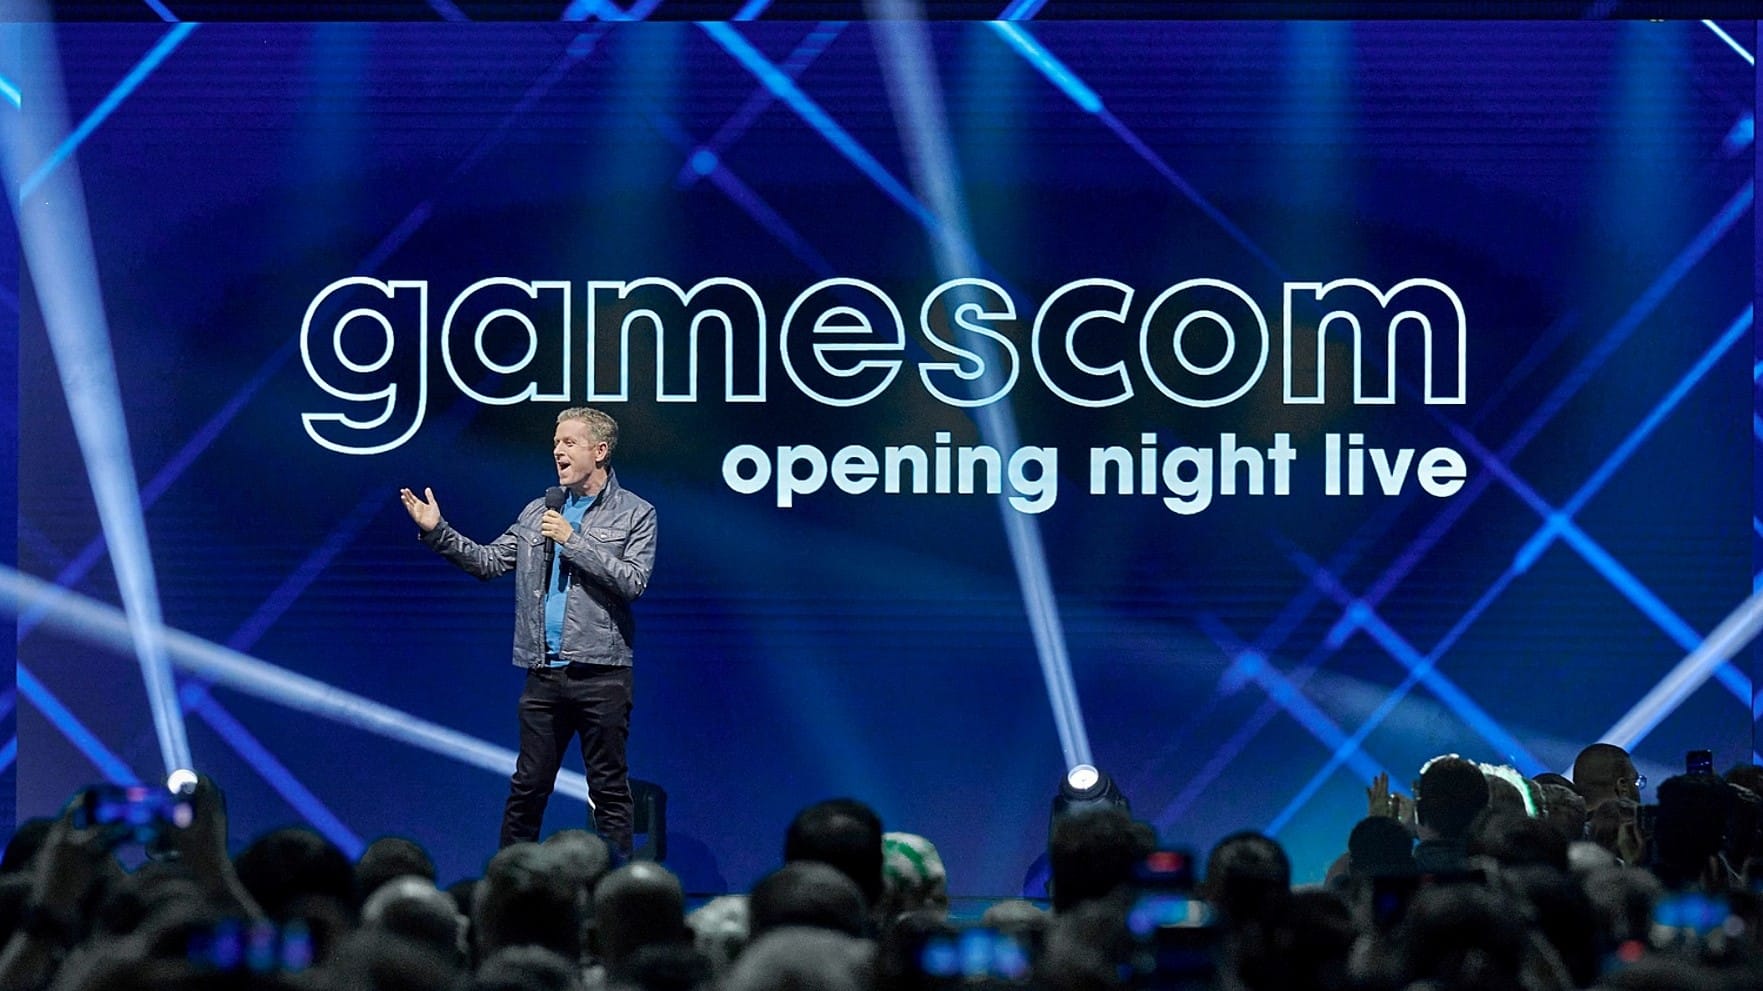 Zenless Zone Zero Is Coming to Gamescom 2023